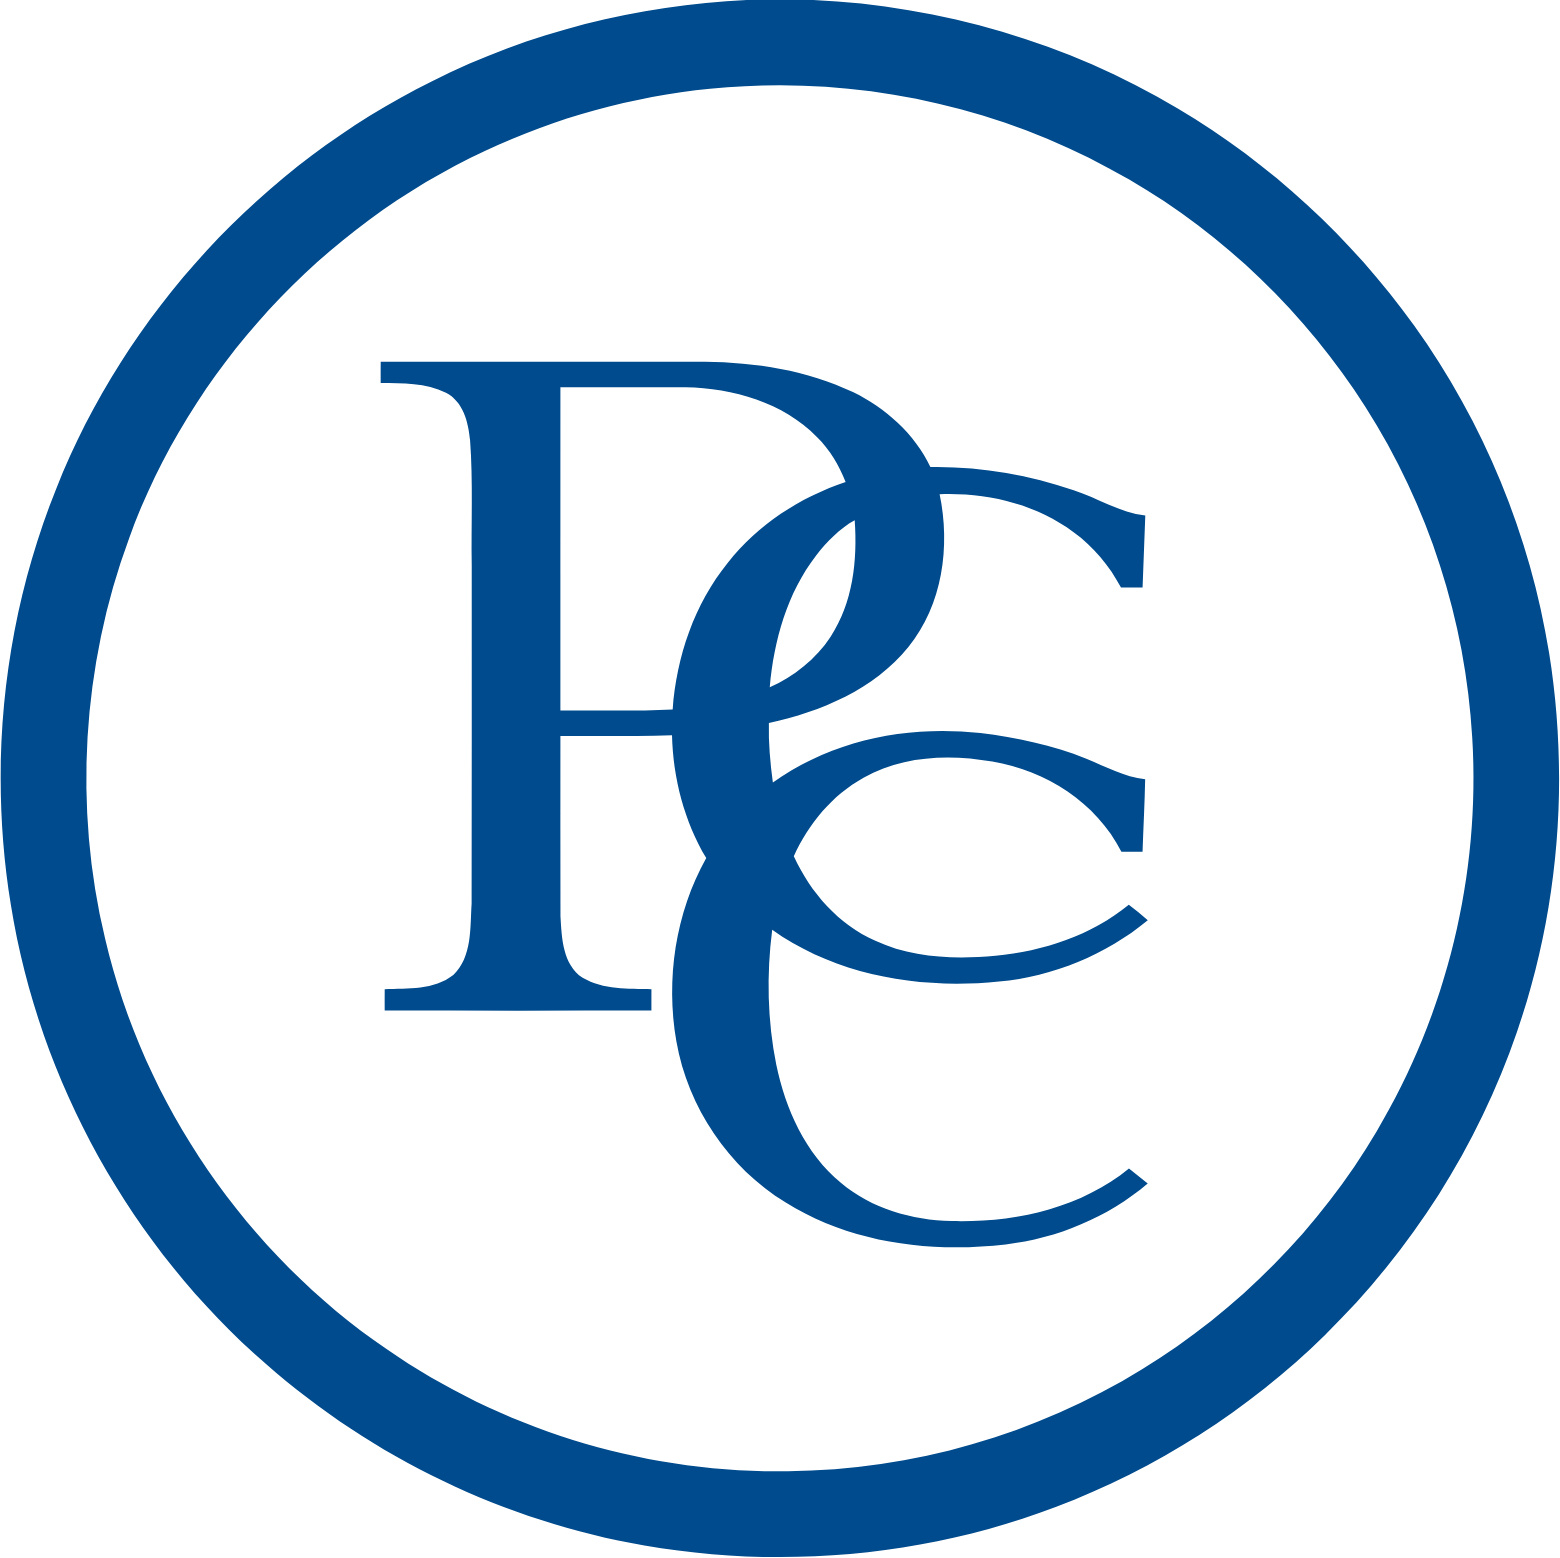 Power Corporation of Canada logo (PNG transparent)